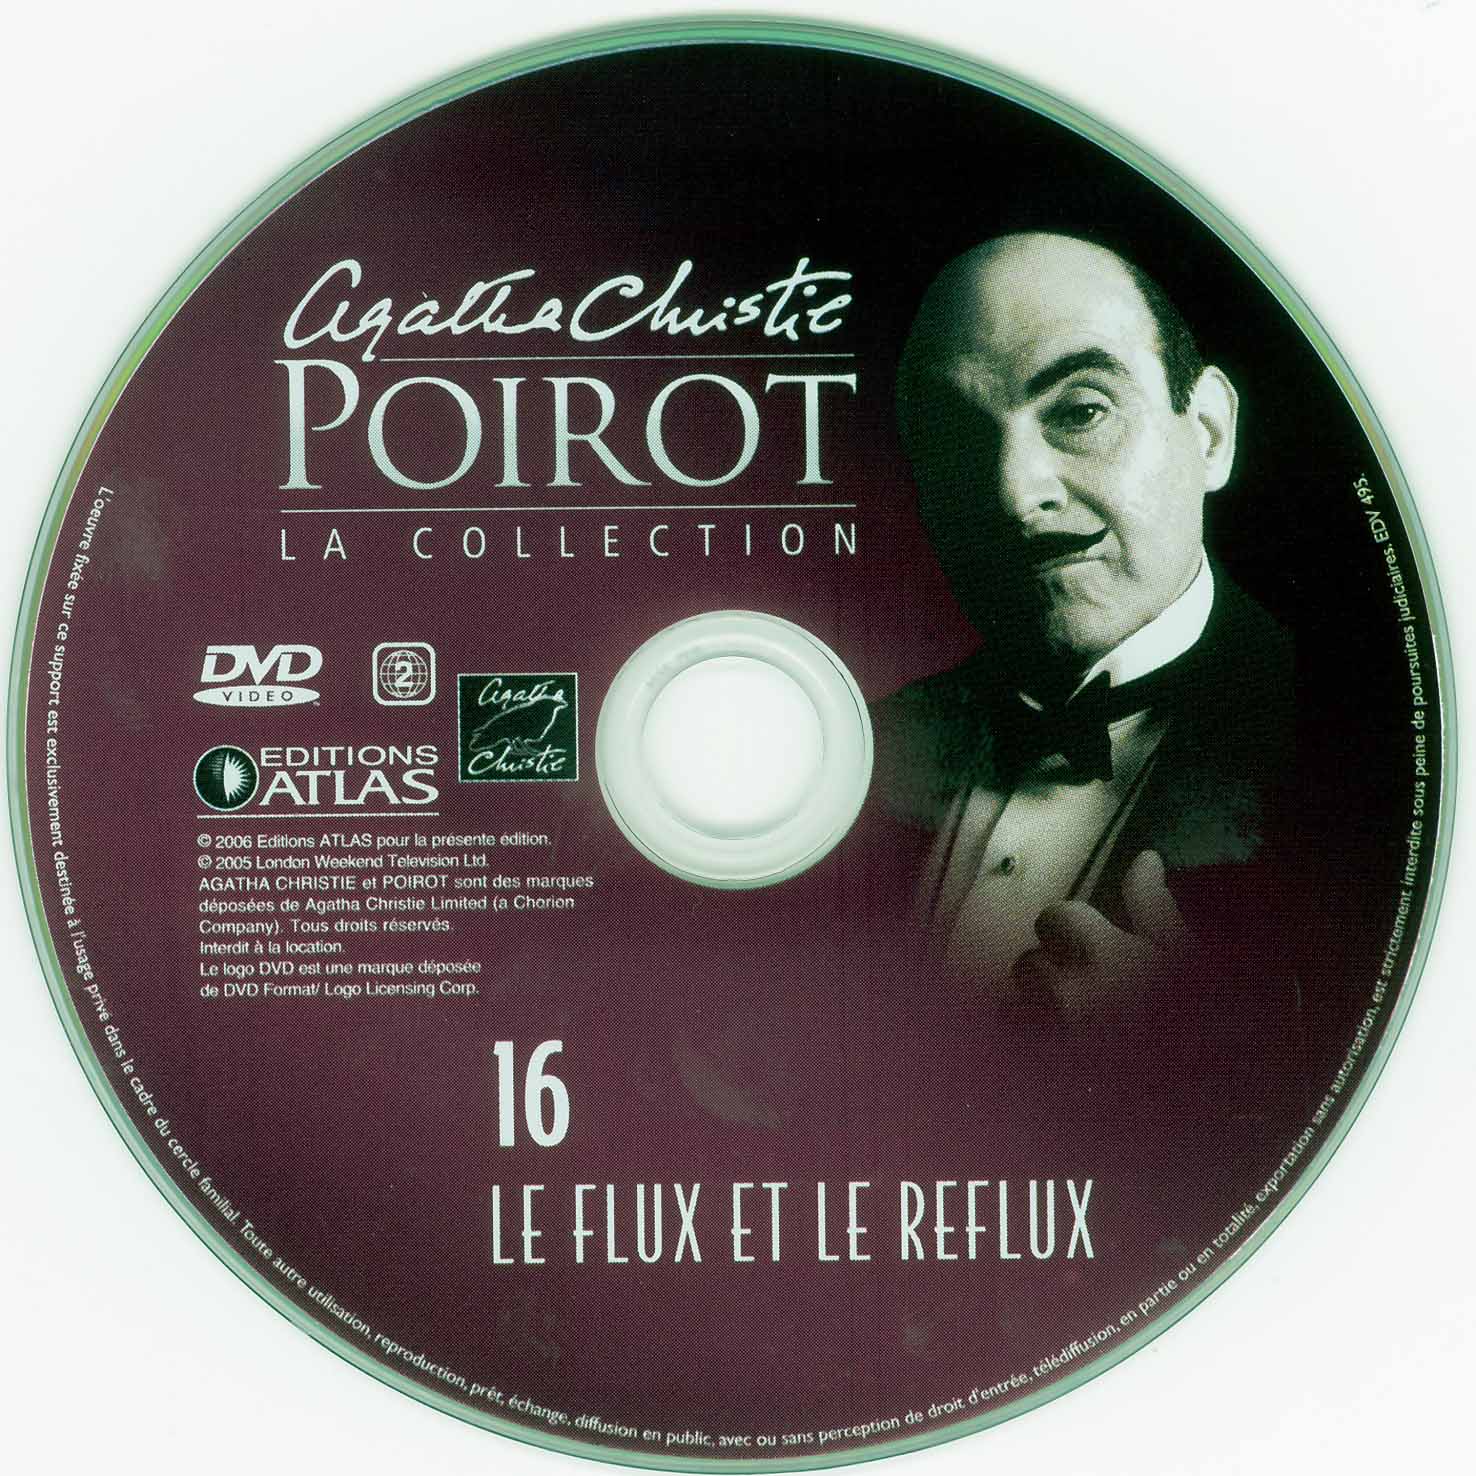 Hercule Poirot vol 16